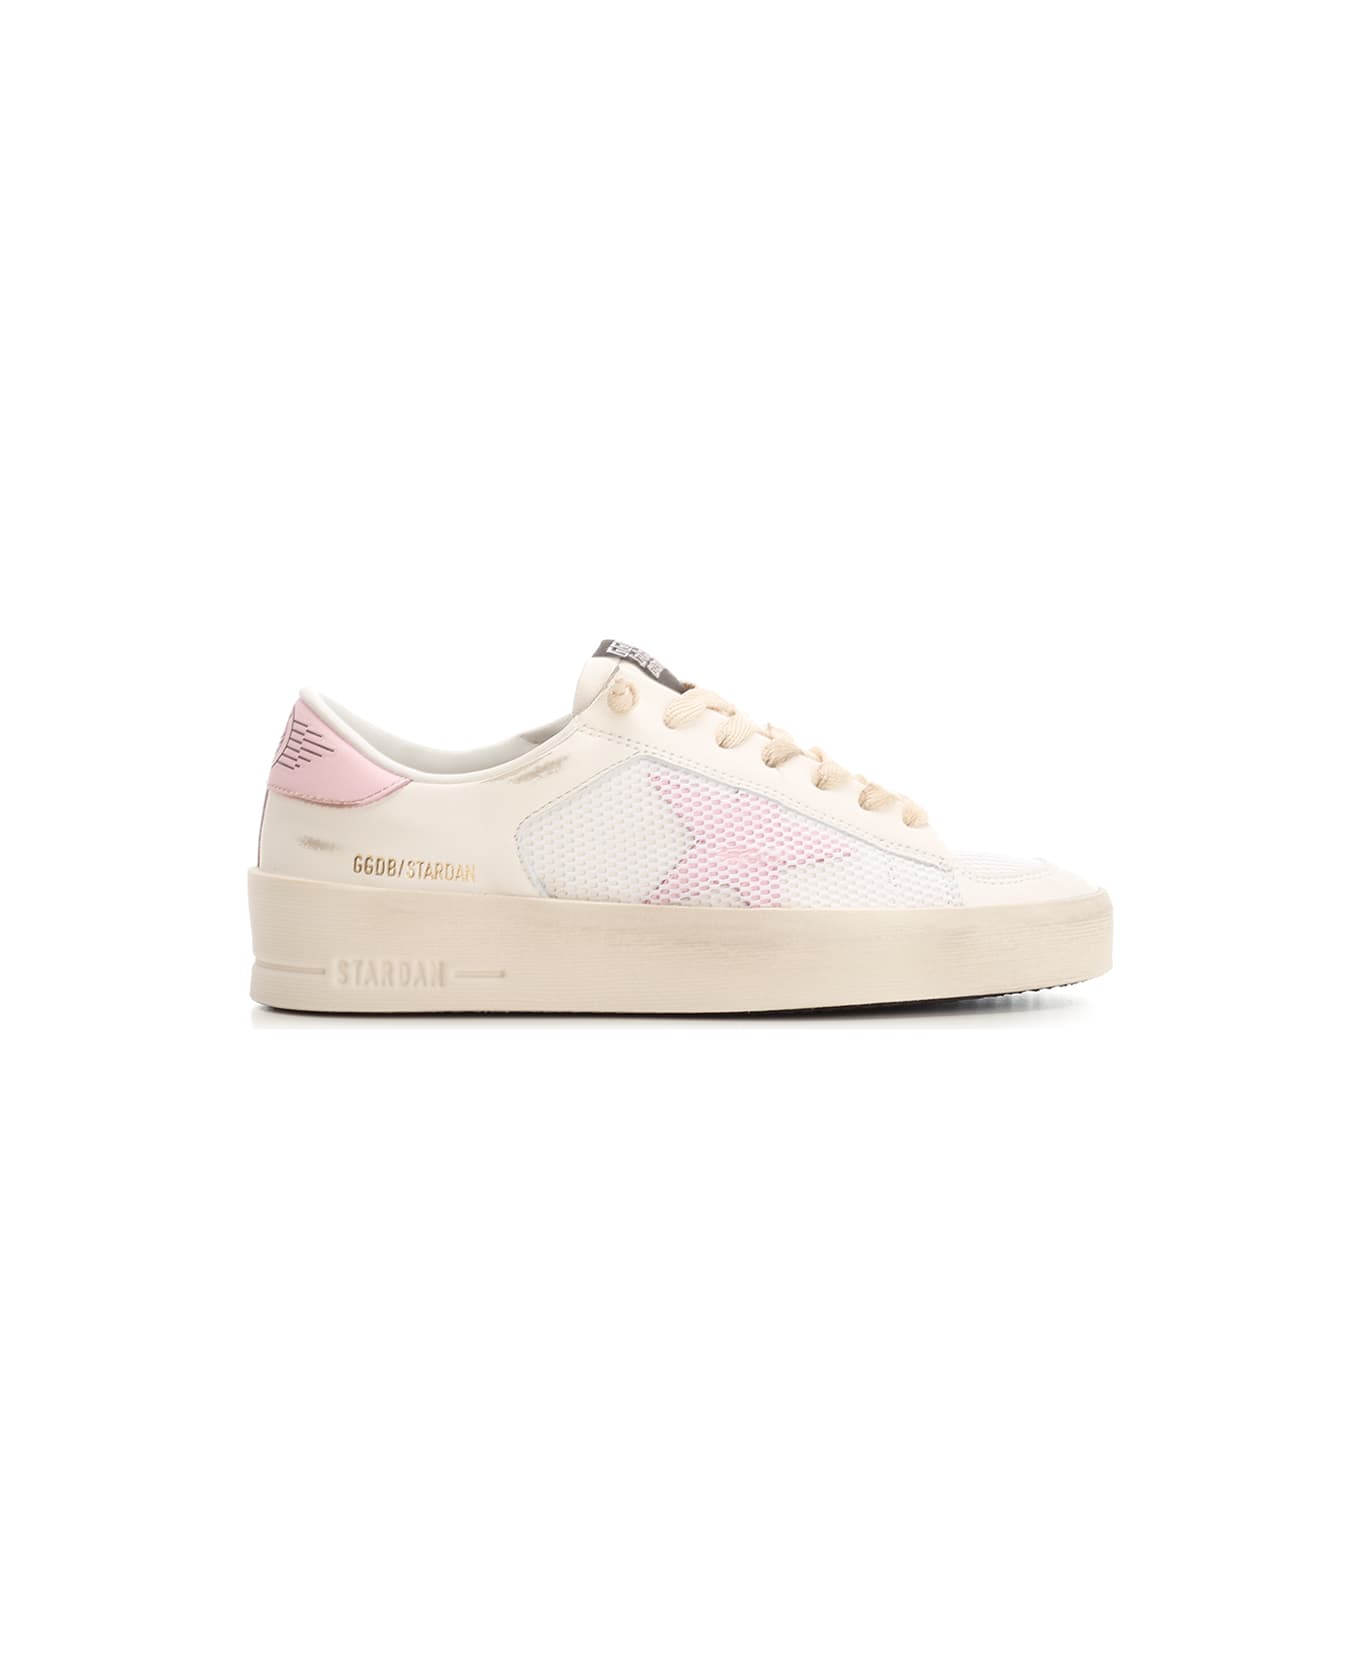 Golden Goose Stardan Mesh Sneakers - White/Orchid Pink スニーカー